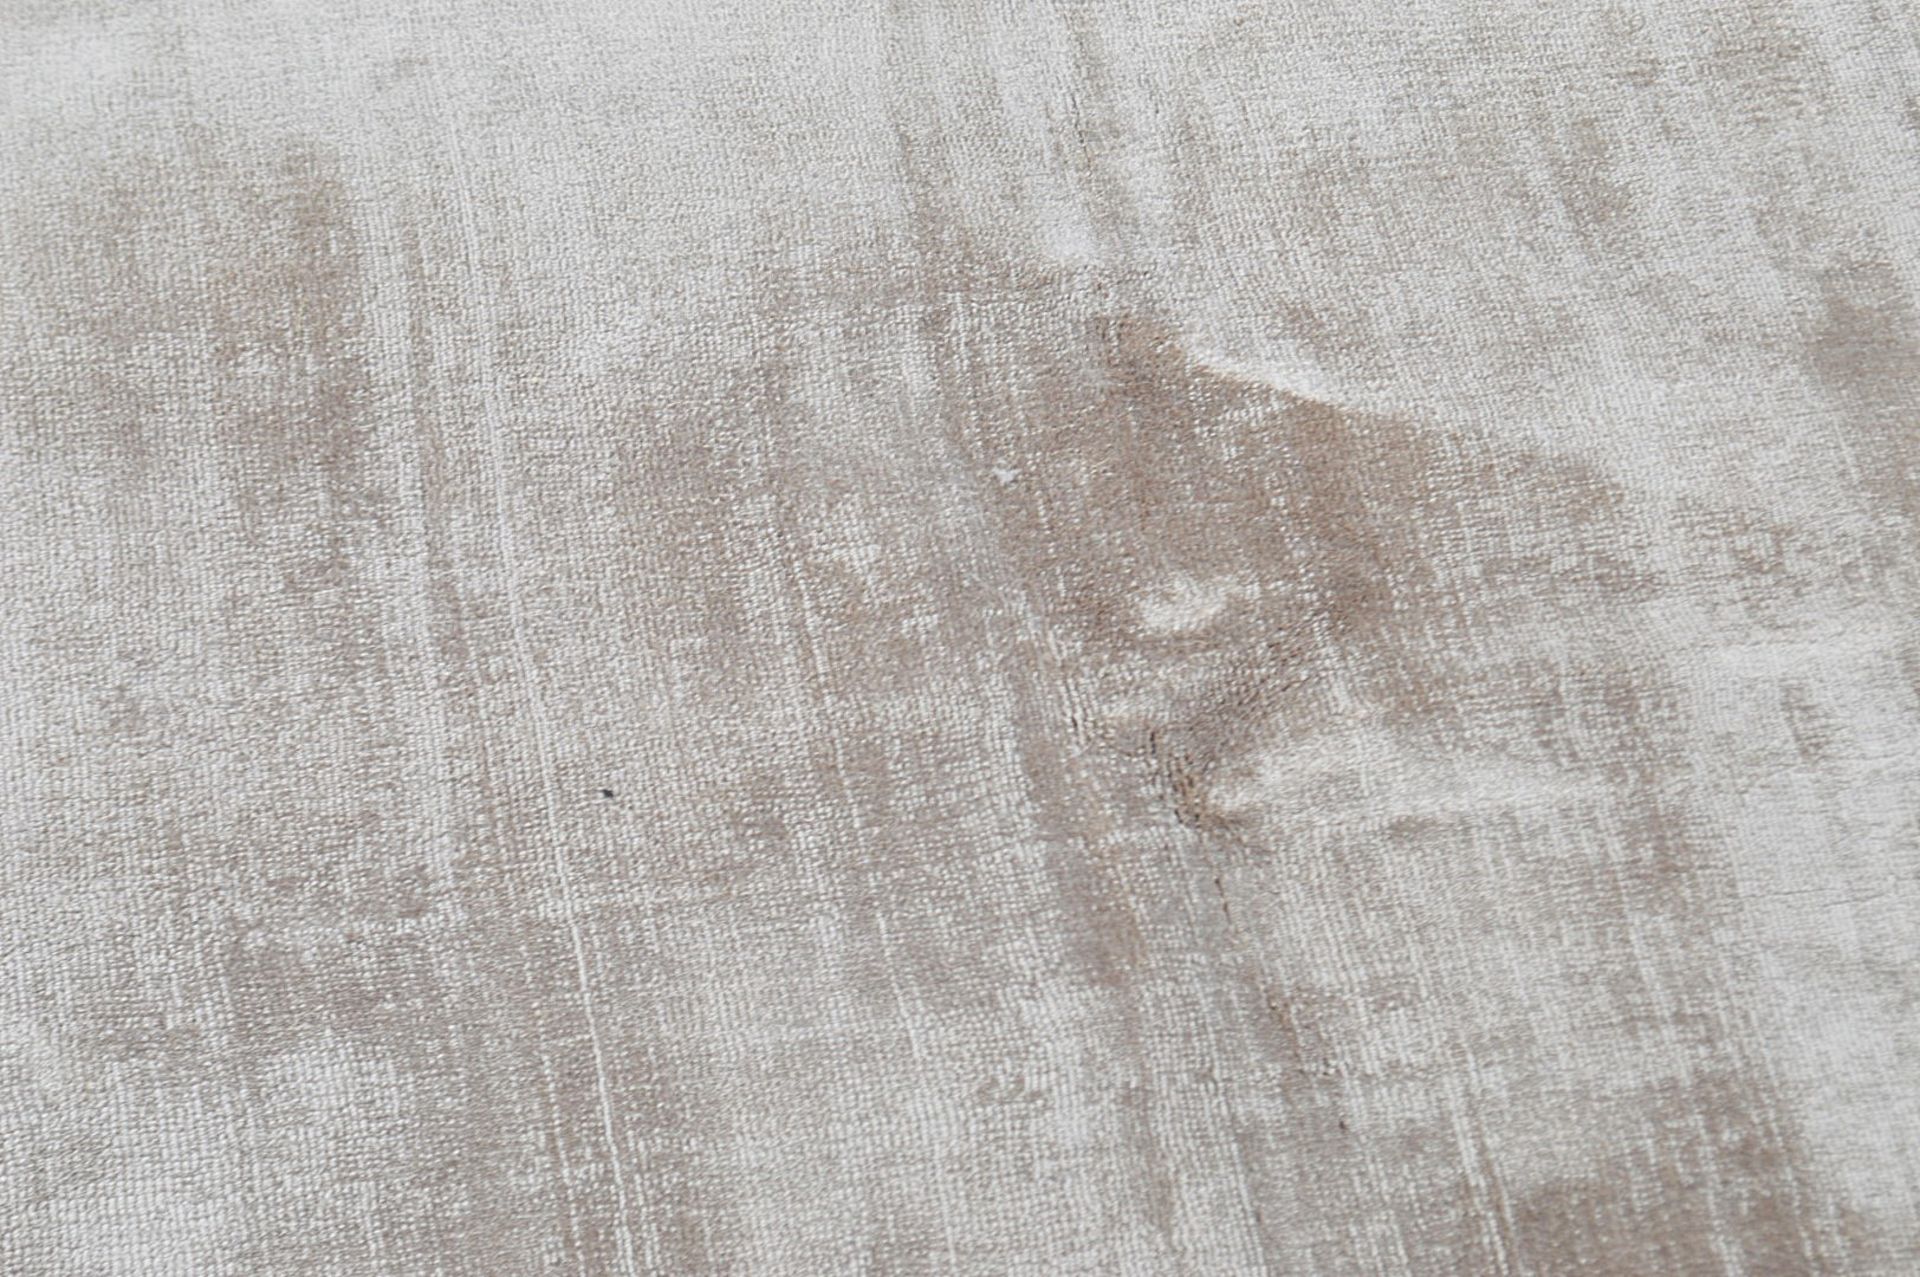 1 x PORADA 'Bright' Luxurious Carpet Rug In A Light Smoke Mocha / Tone - 160x230cm - RRP £1,749 - Image 5 of 9